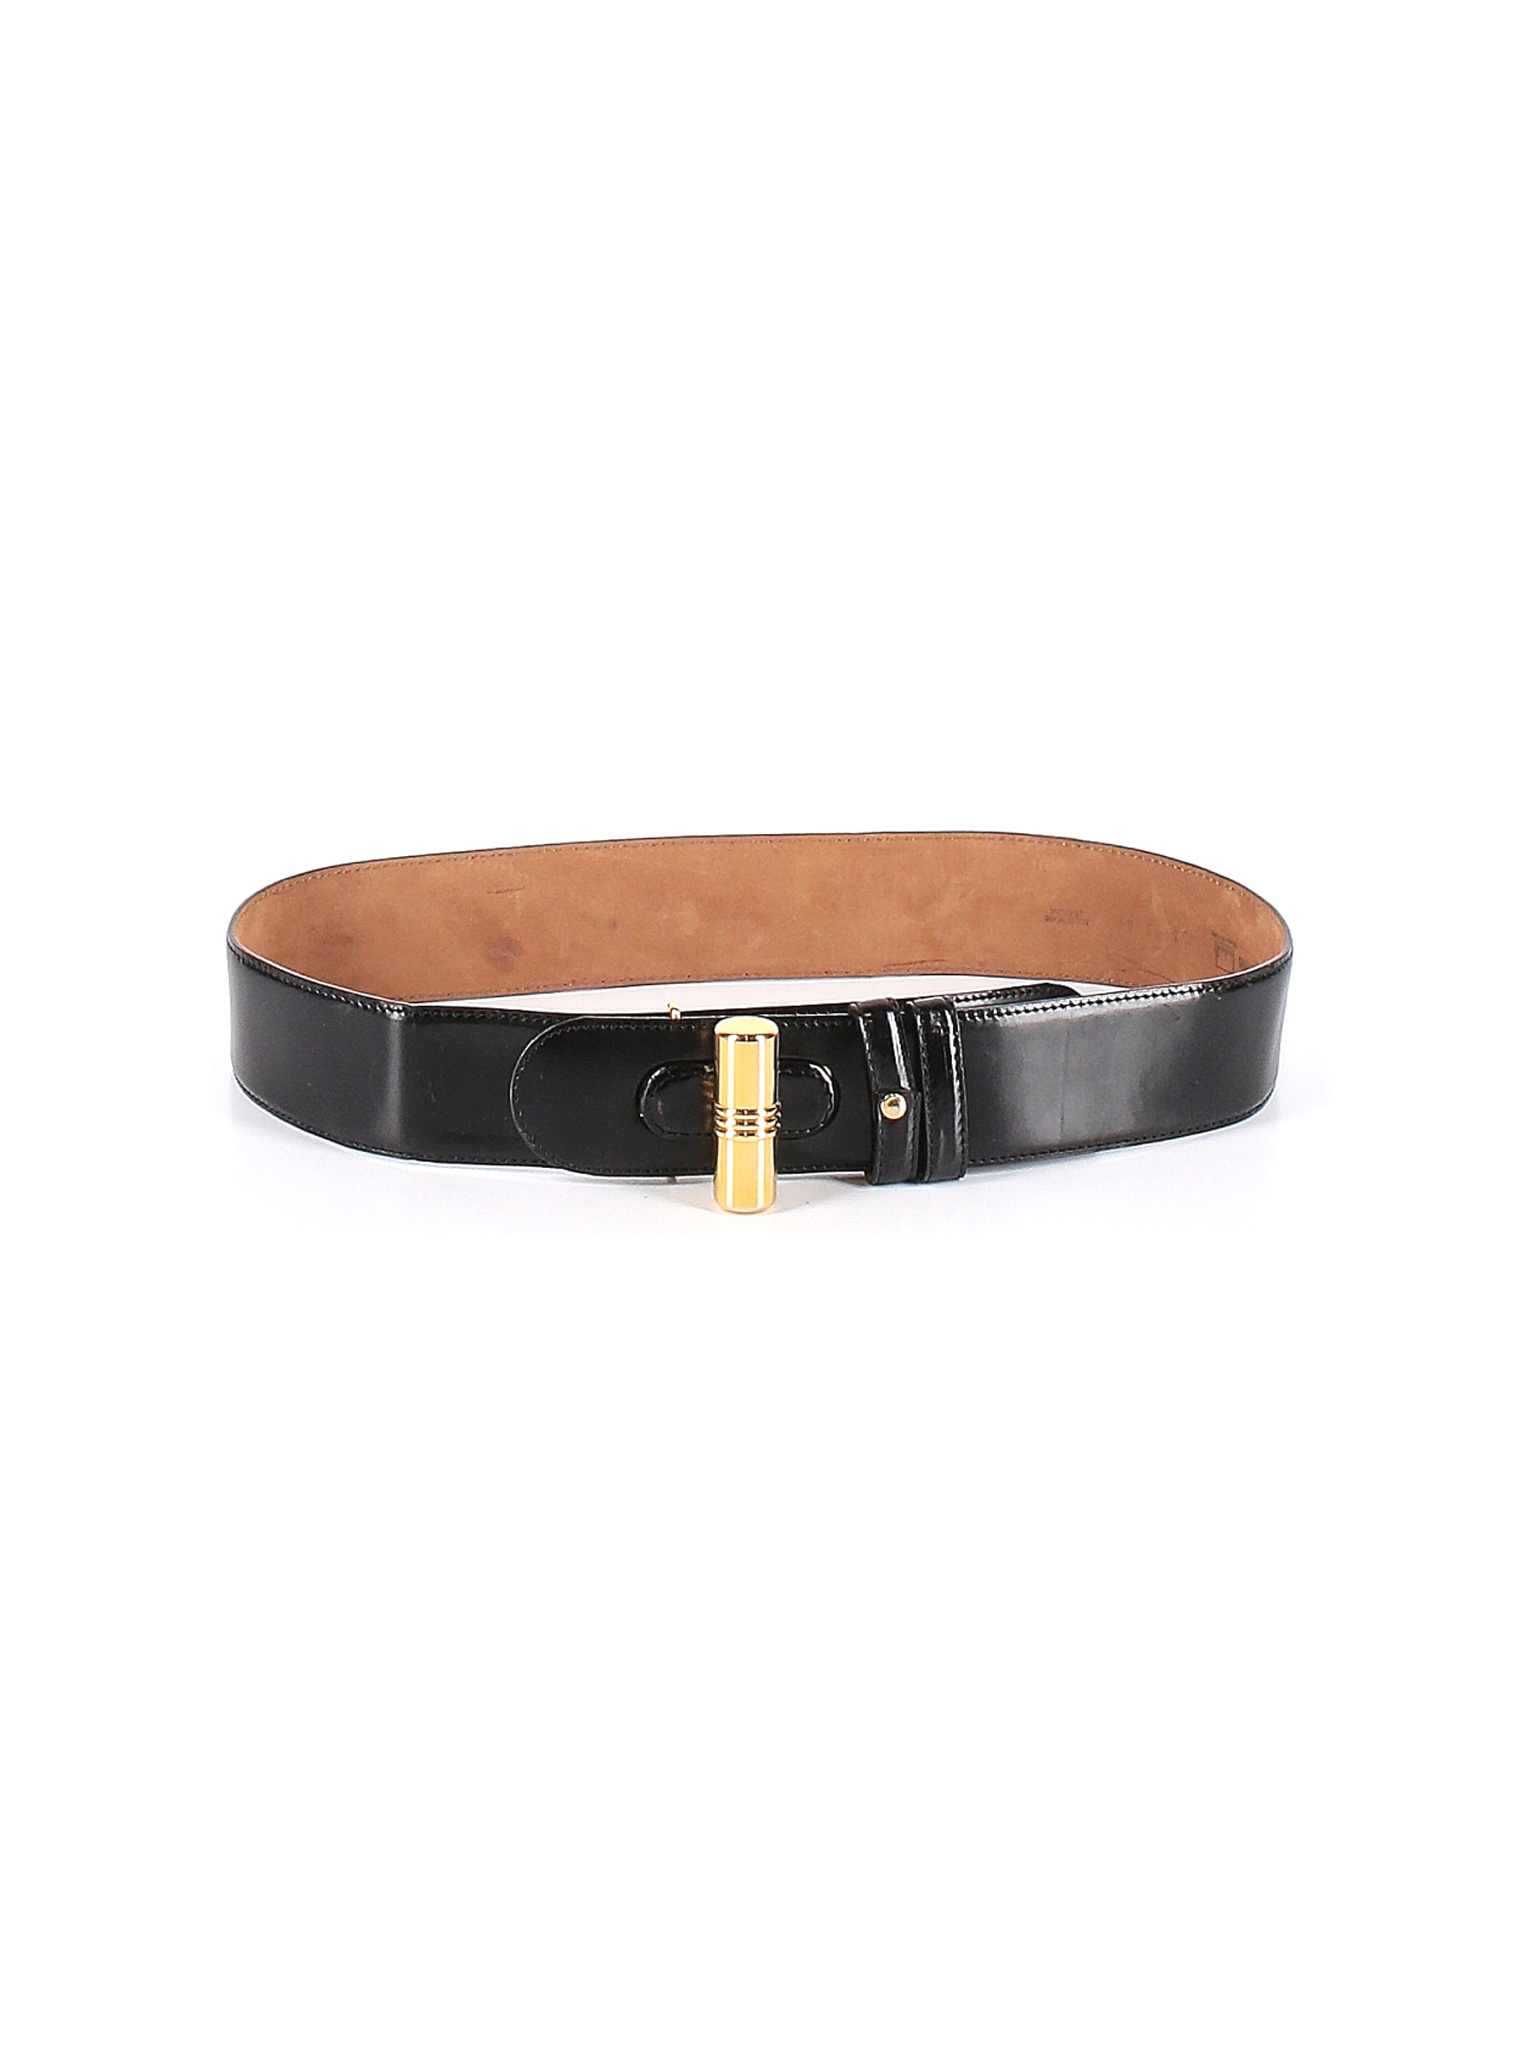 Moschino Women Black Leather Belt 44 italian | eBay